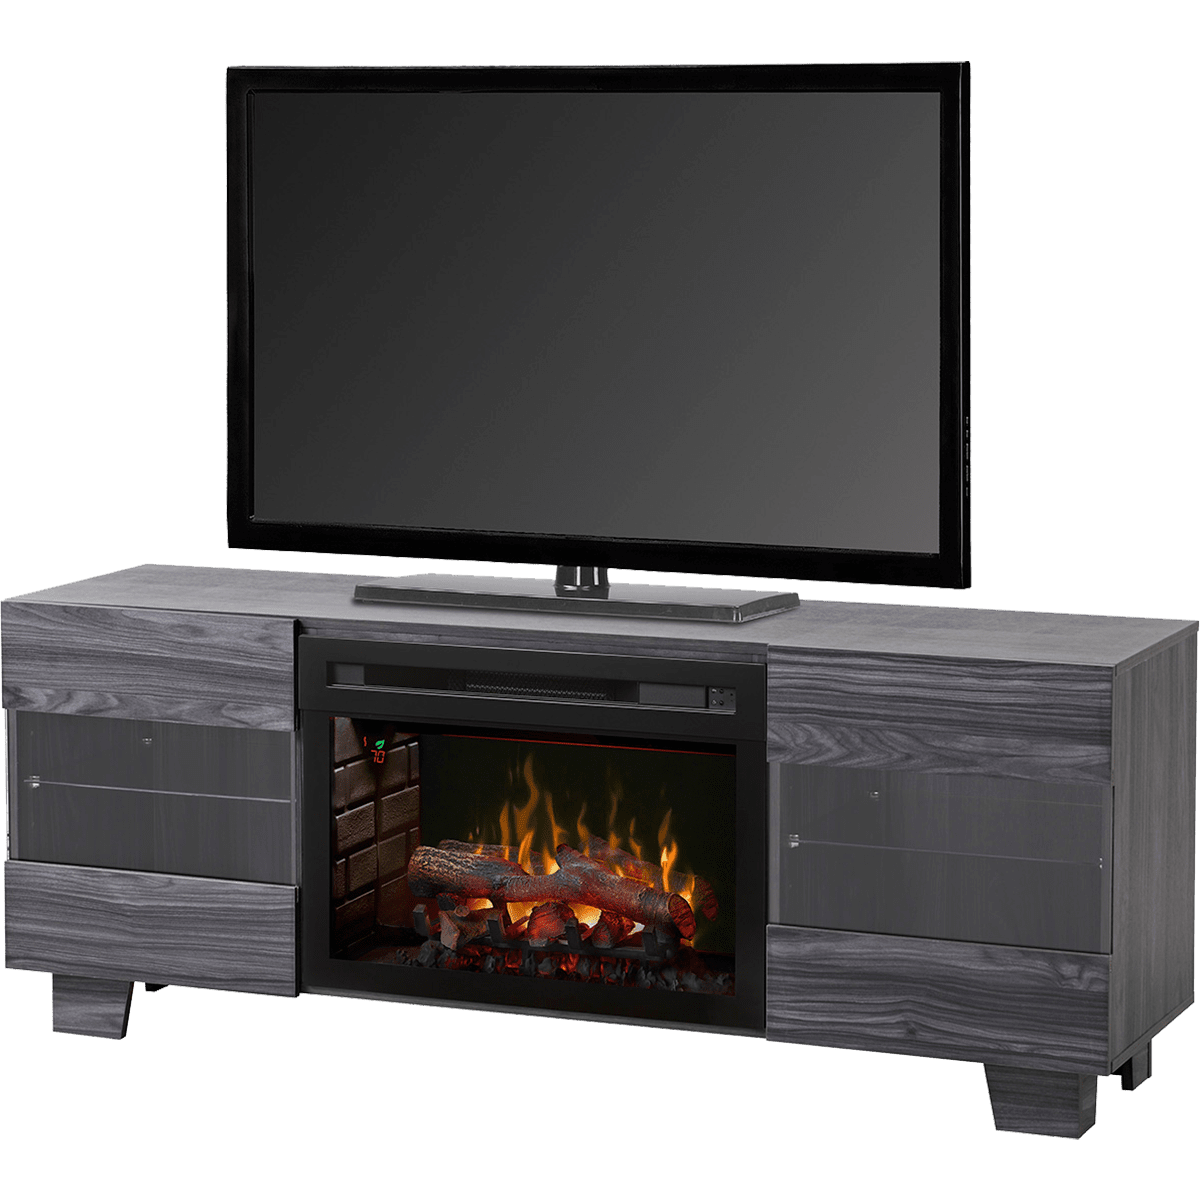 Dimplex Max 62 Electric Fireplace Tv, Dimplex Olivia Fireplace Media Console